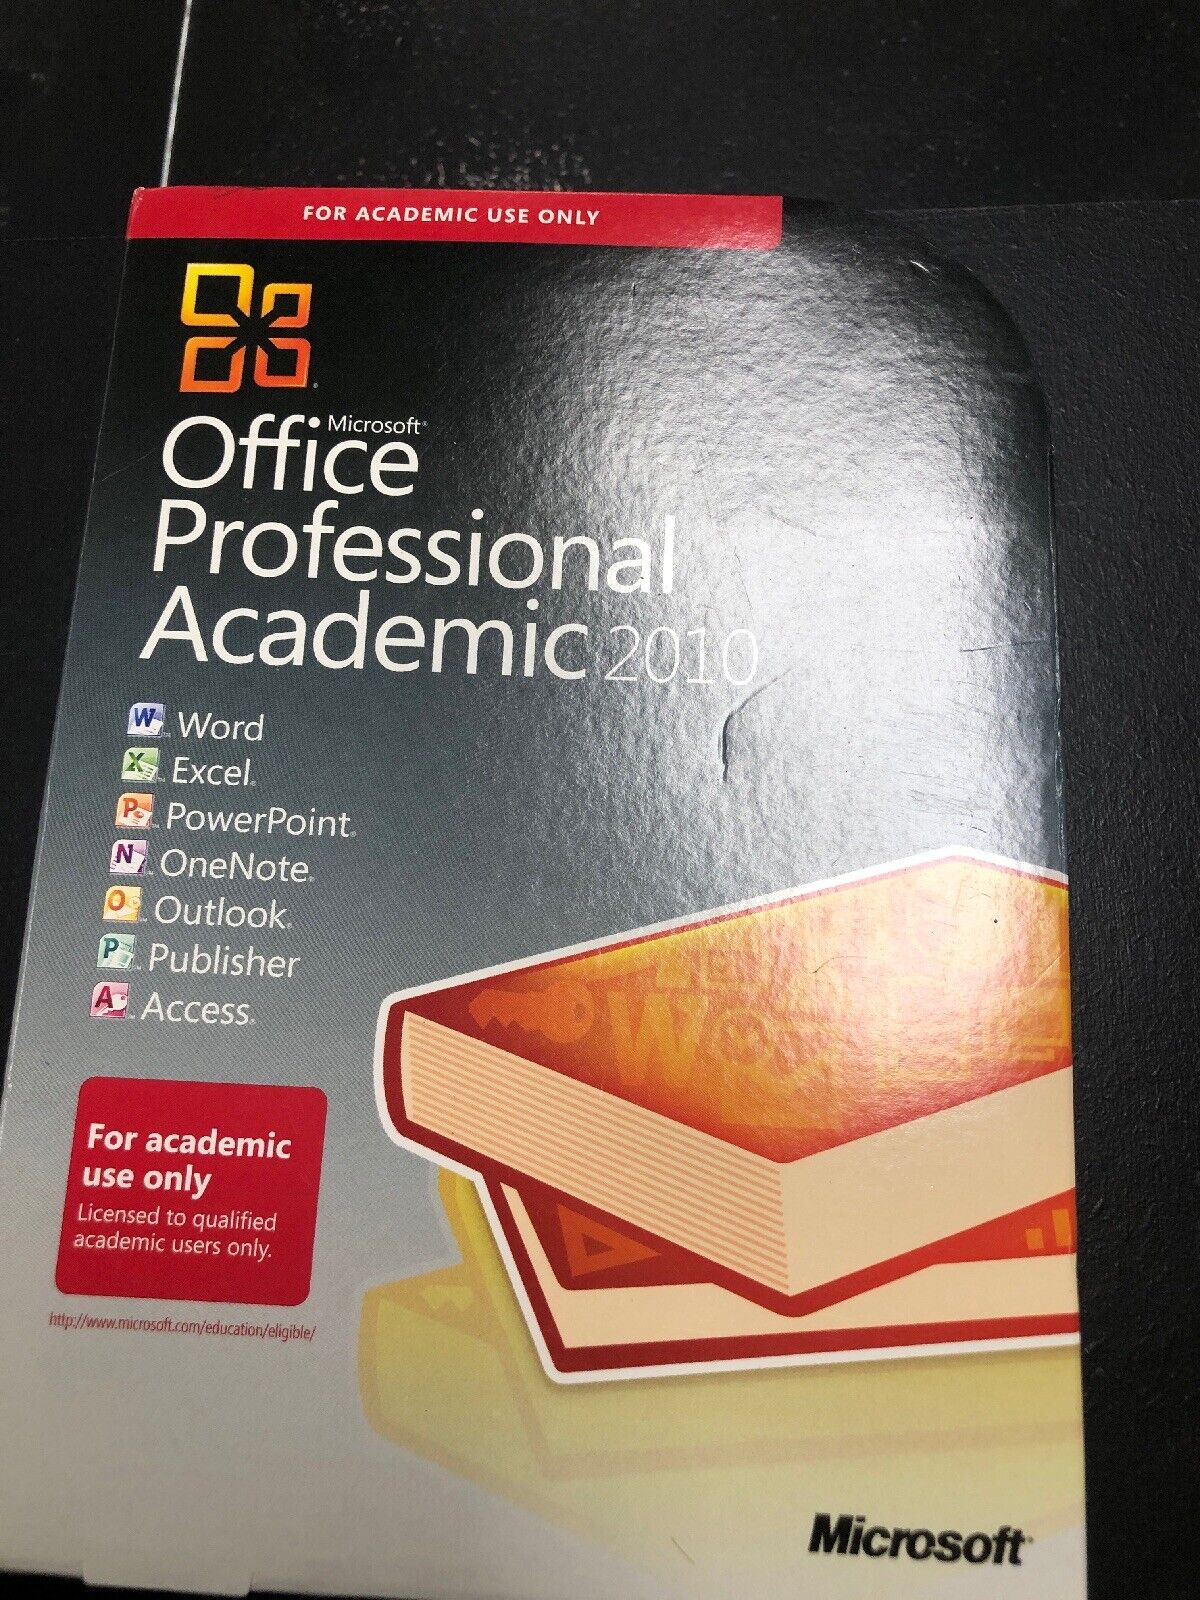 Microsoft Office Professional Pro 2010 Academic NEW Sealed Full VERSION